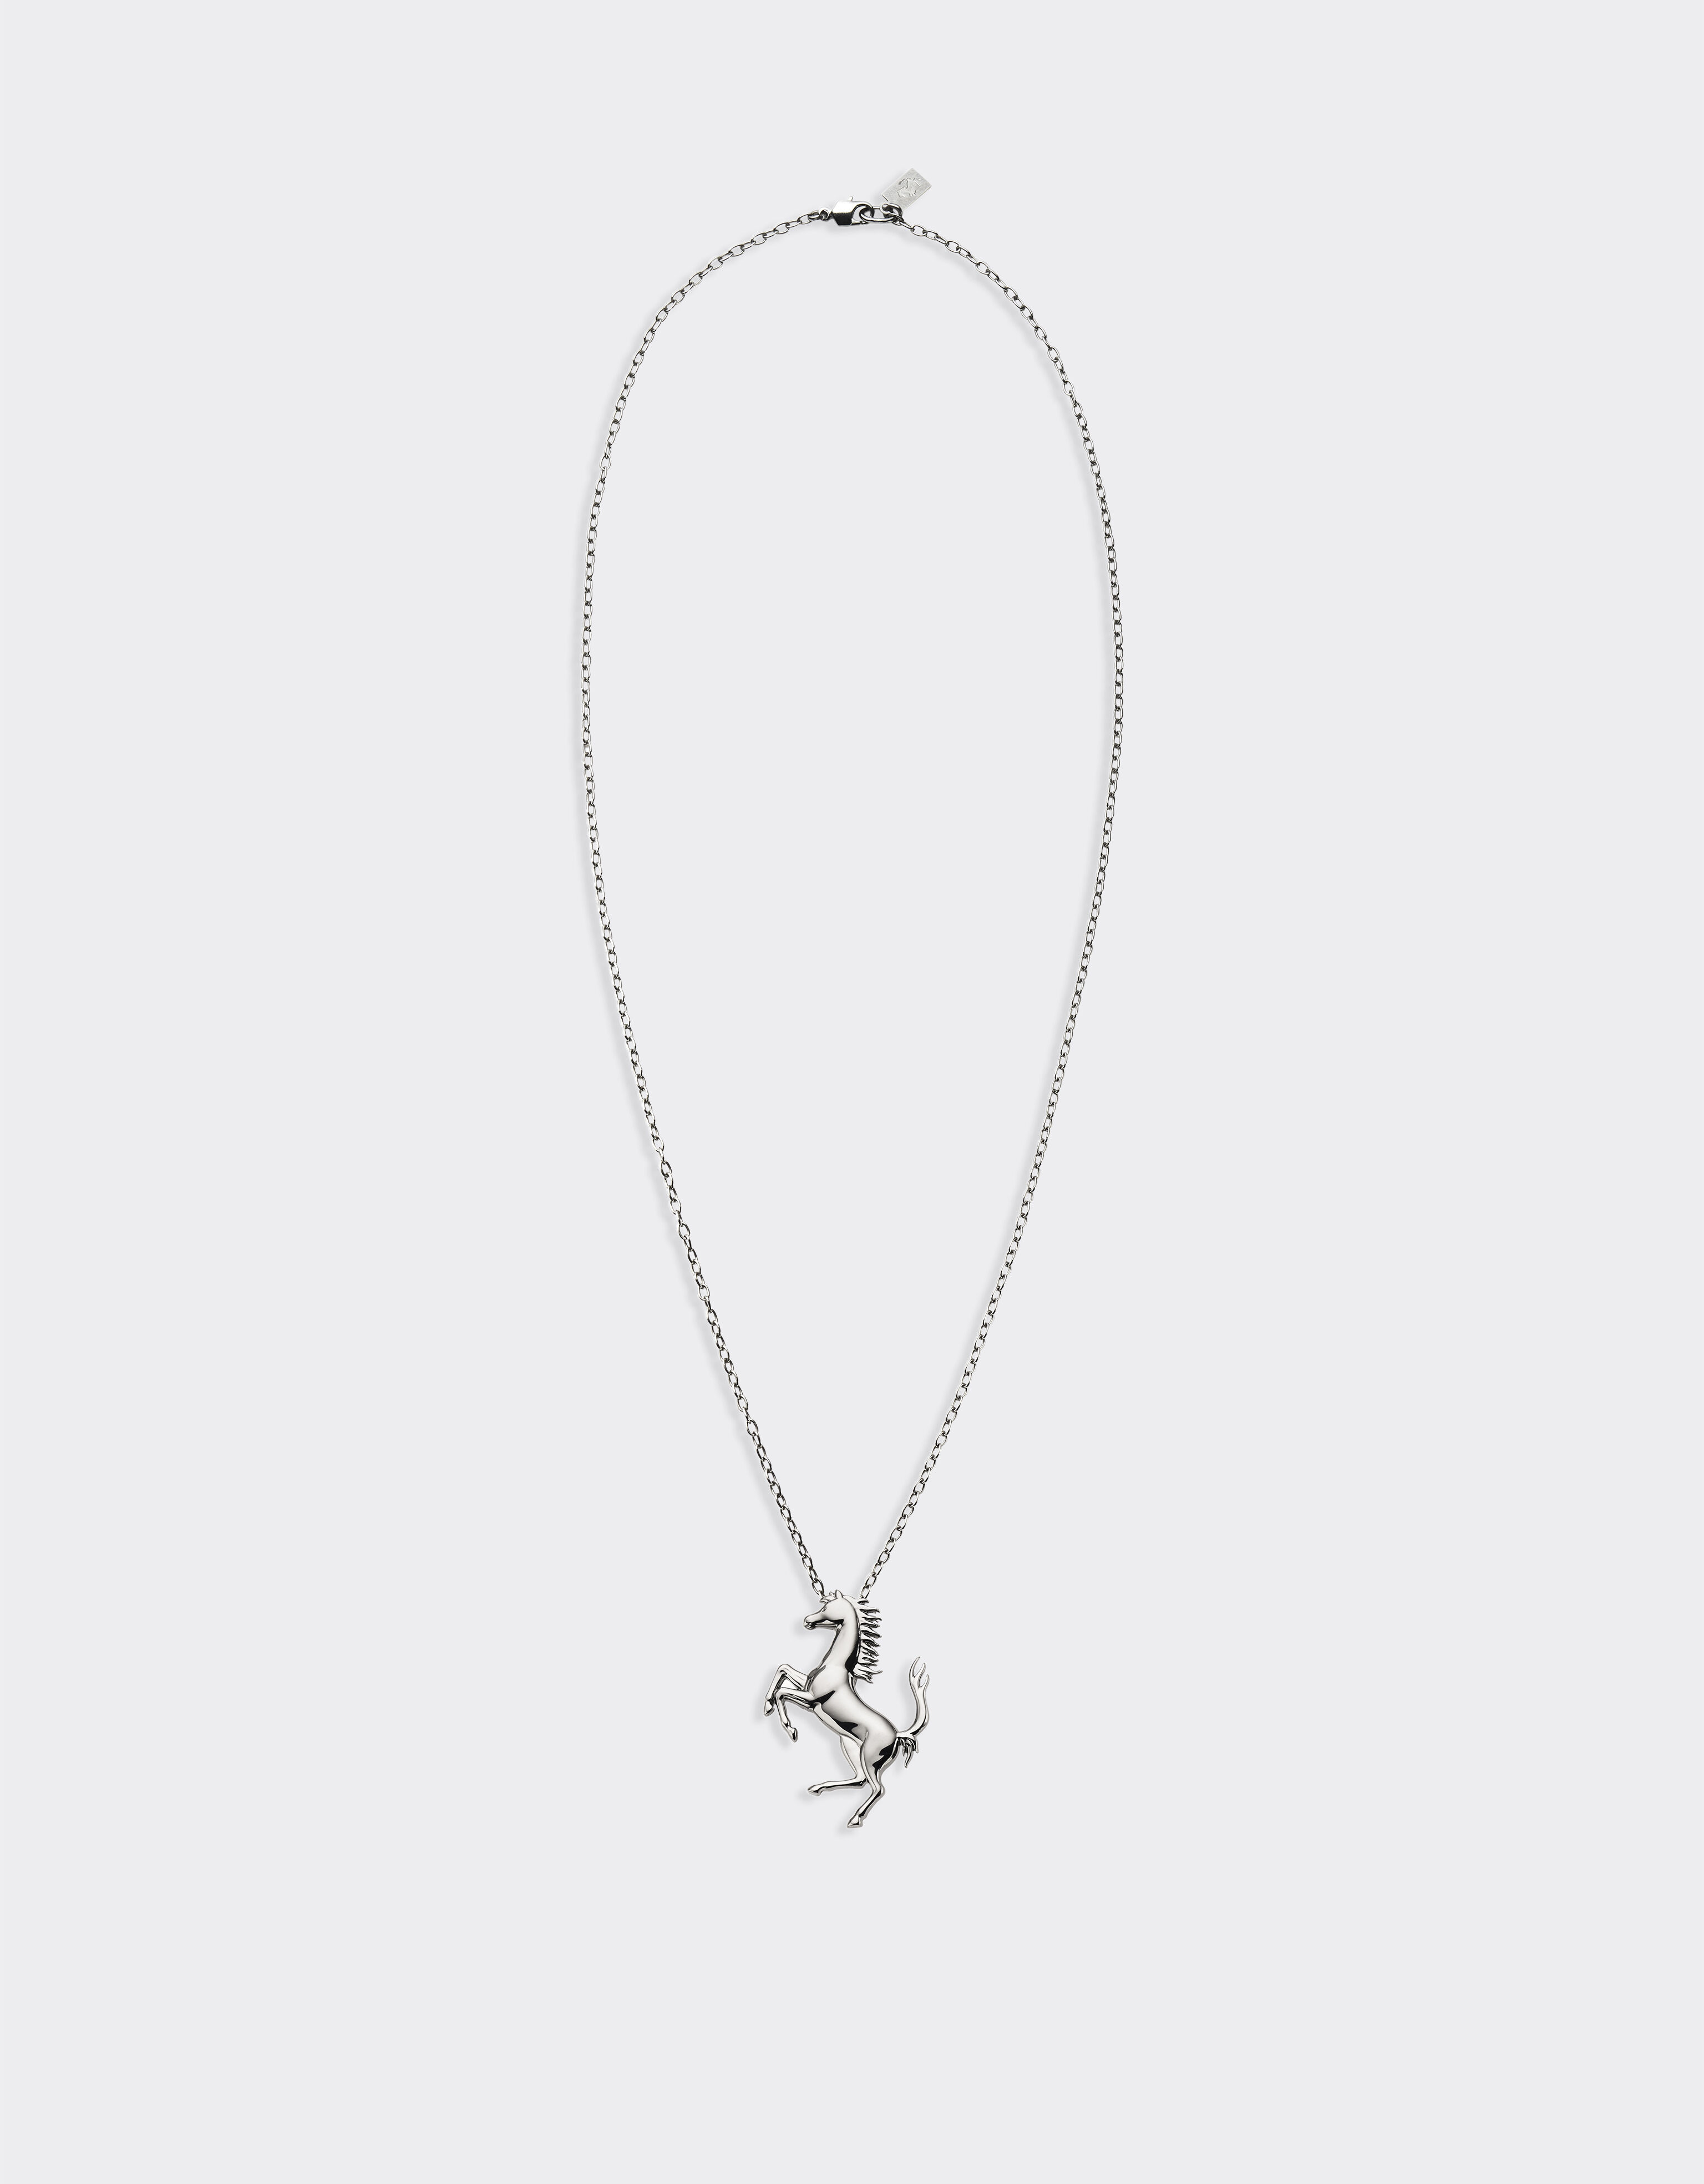 Ferrari Necklace with Prancing Horse Dark Grey 21429f